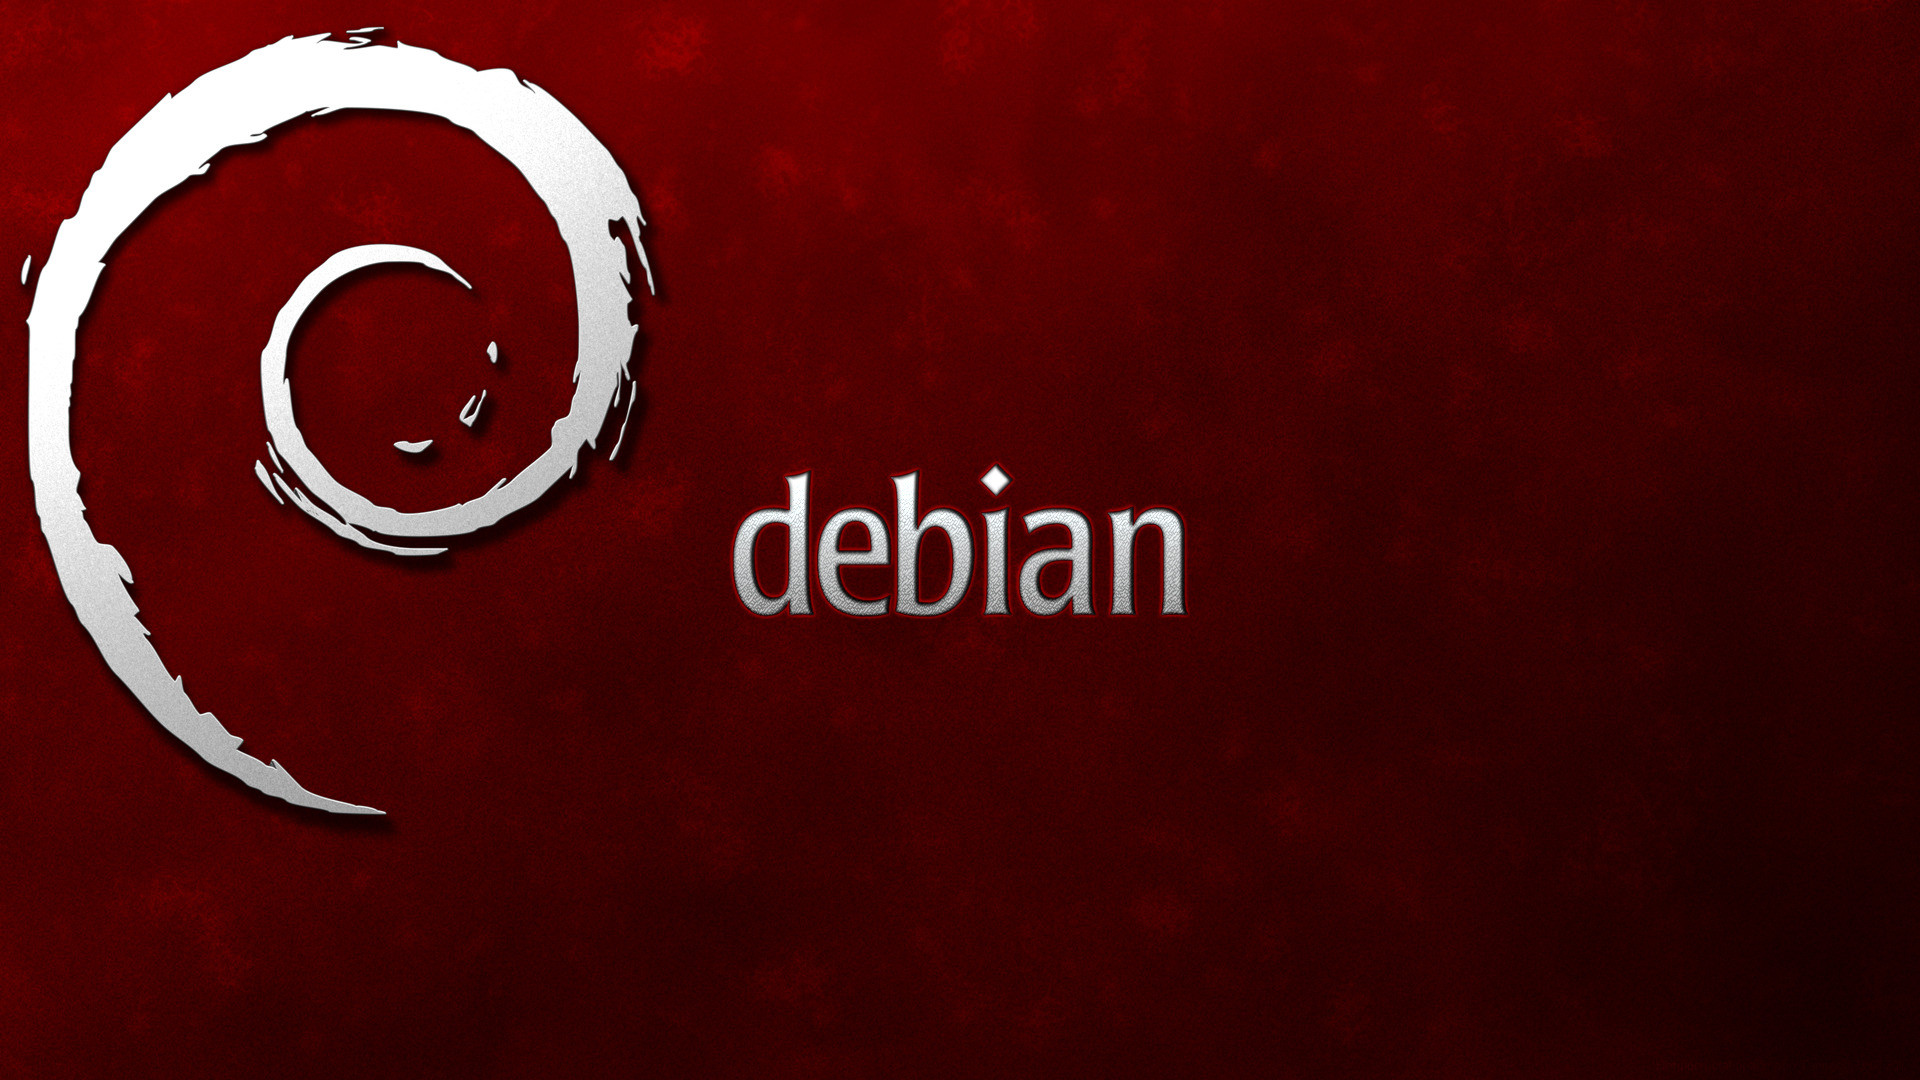 Debian linux computer hd wallpaper 1920×1080 241